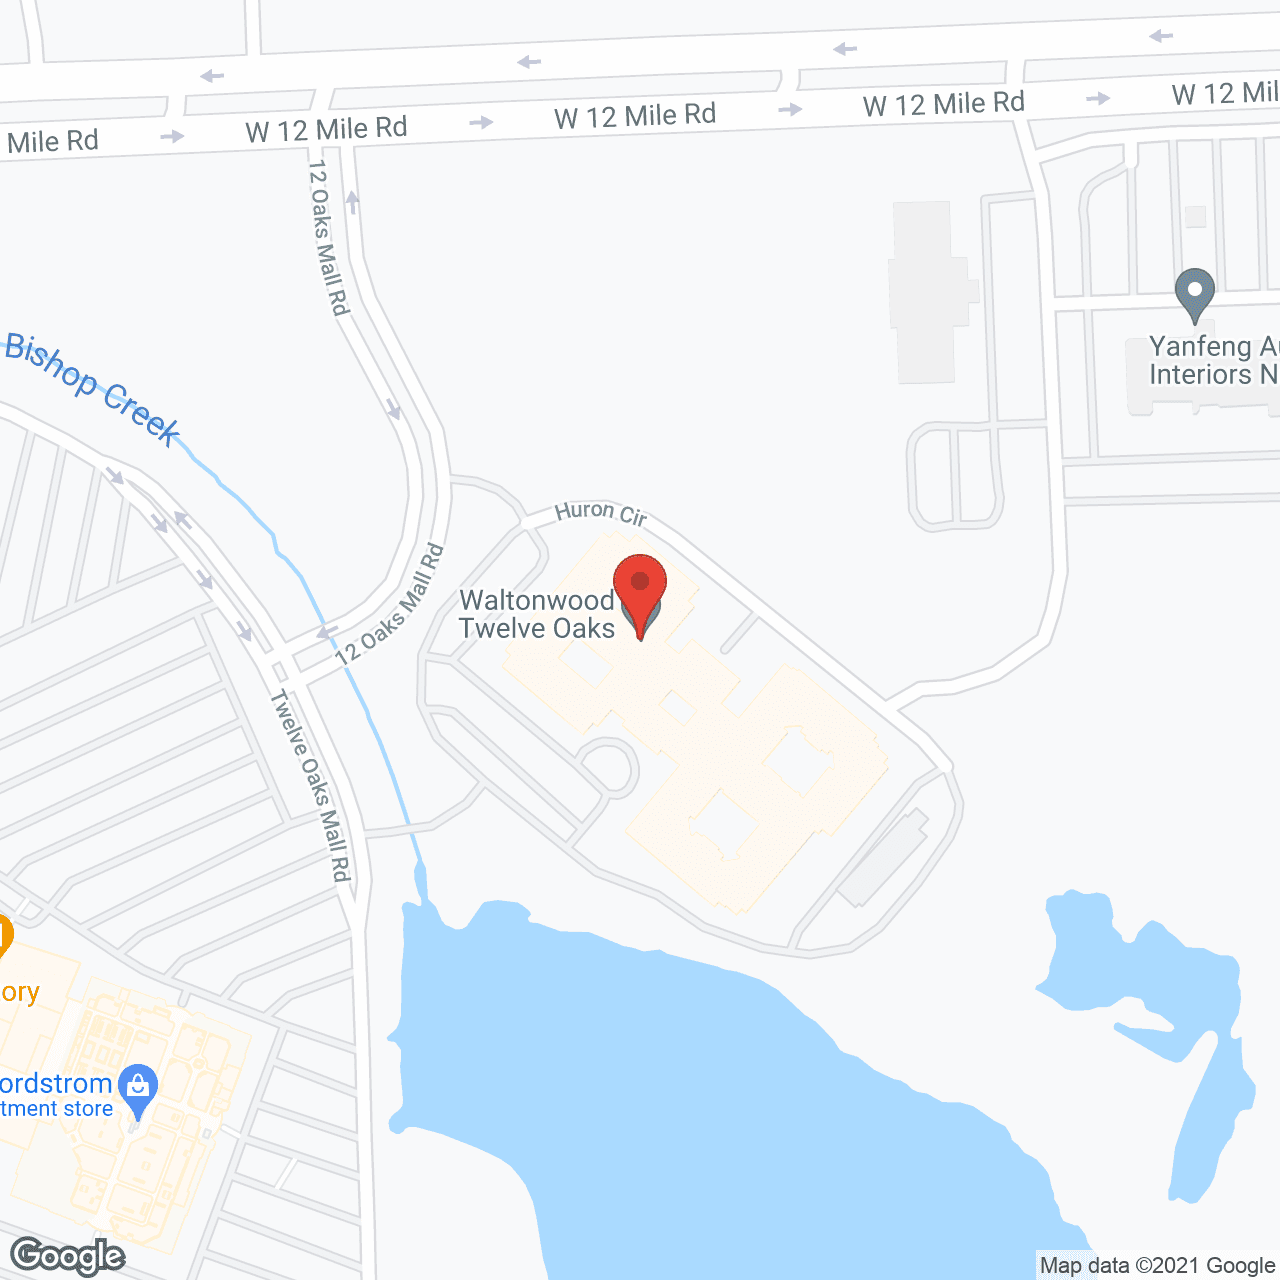 Waltonwood Twelve Oaks in google map